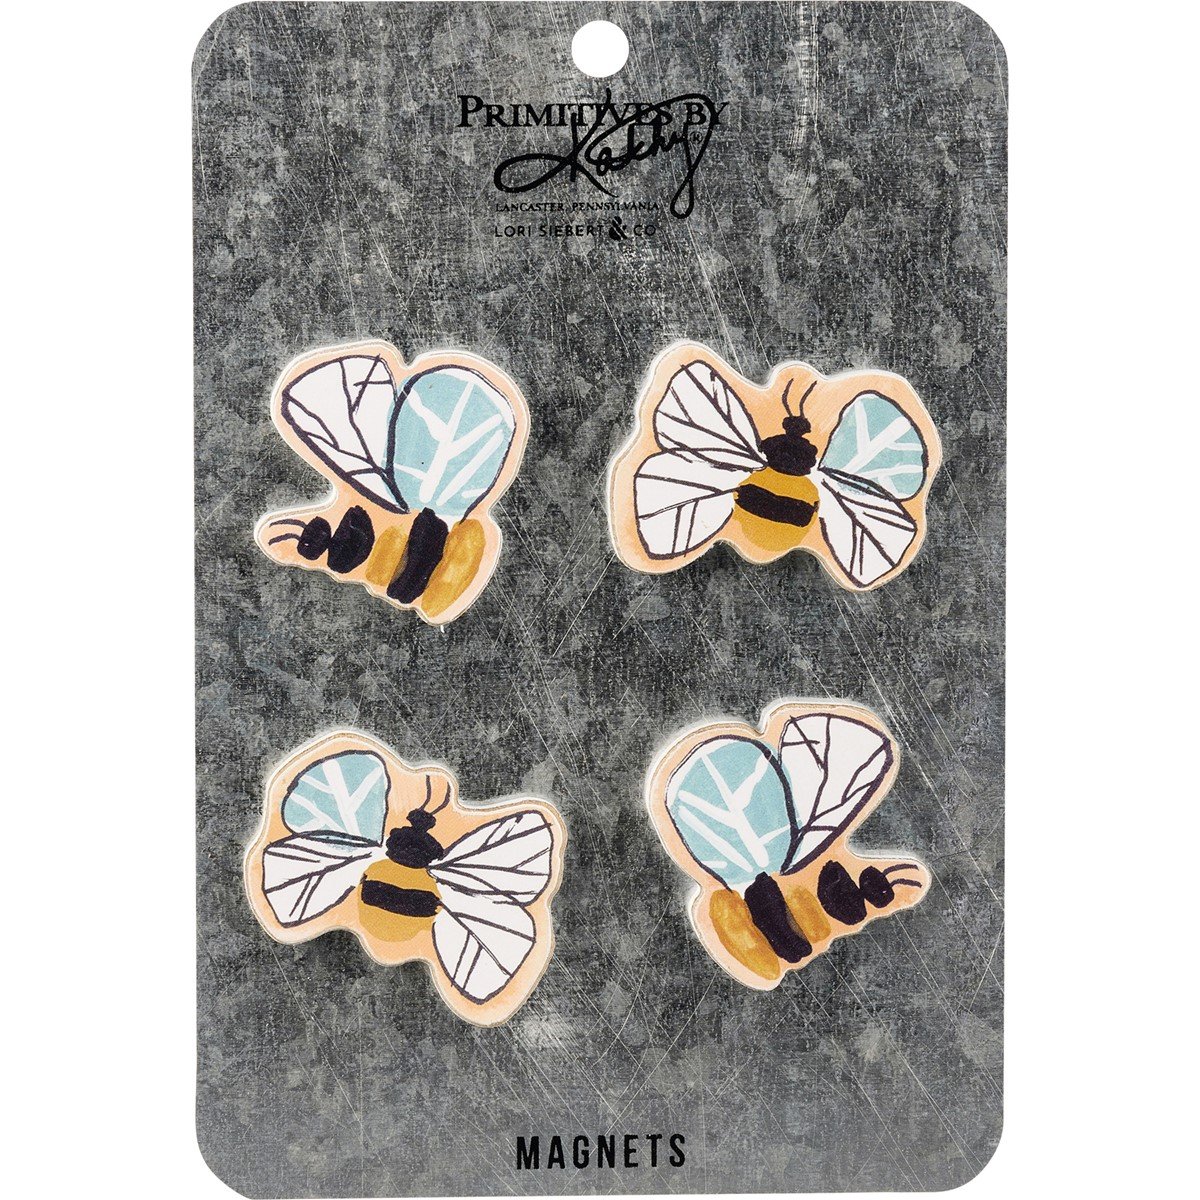 Magnet Set - Bees - 1.75" x 1.75", 2" x 2", Card: 4.75" x 7" - Wood, Paper, Metal, Magnet